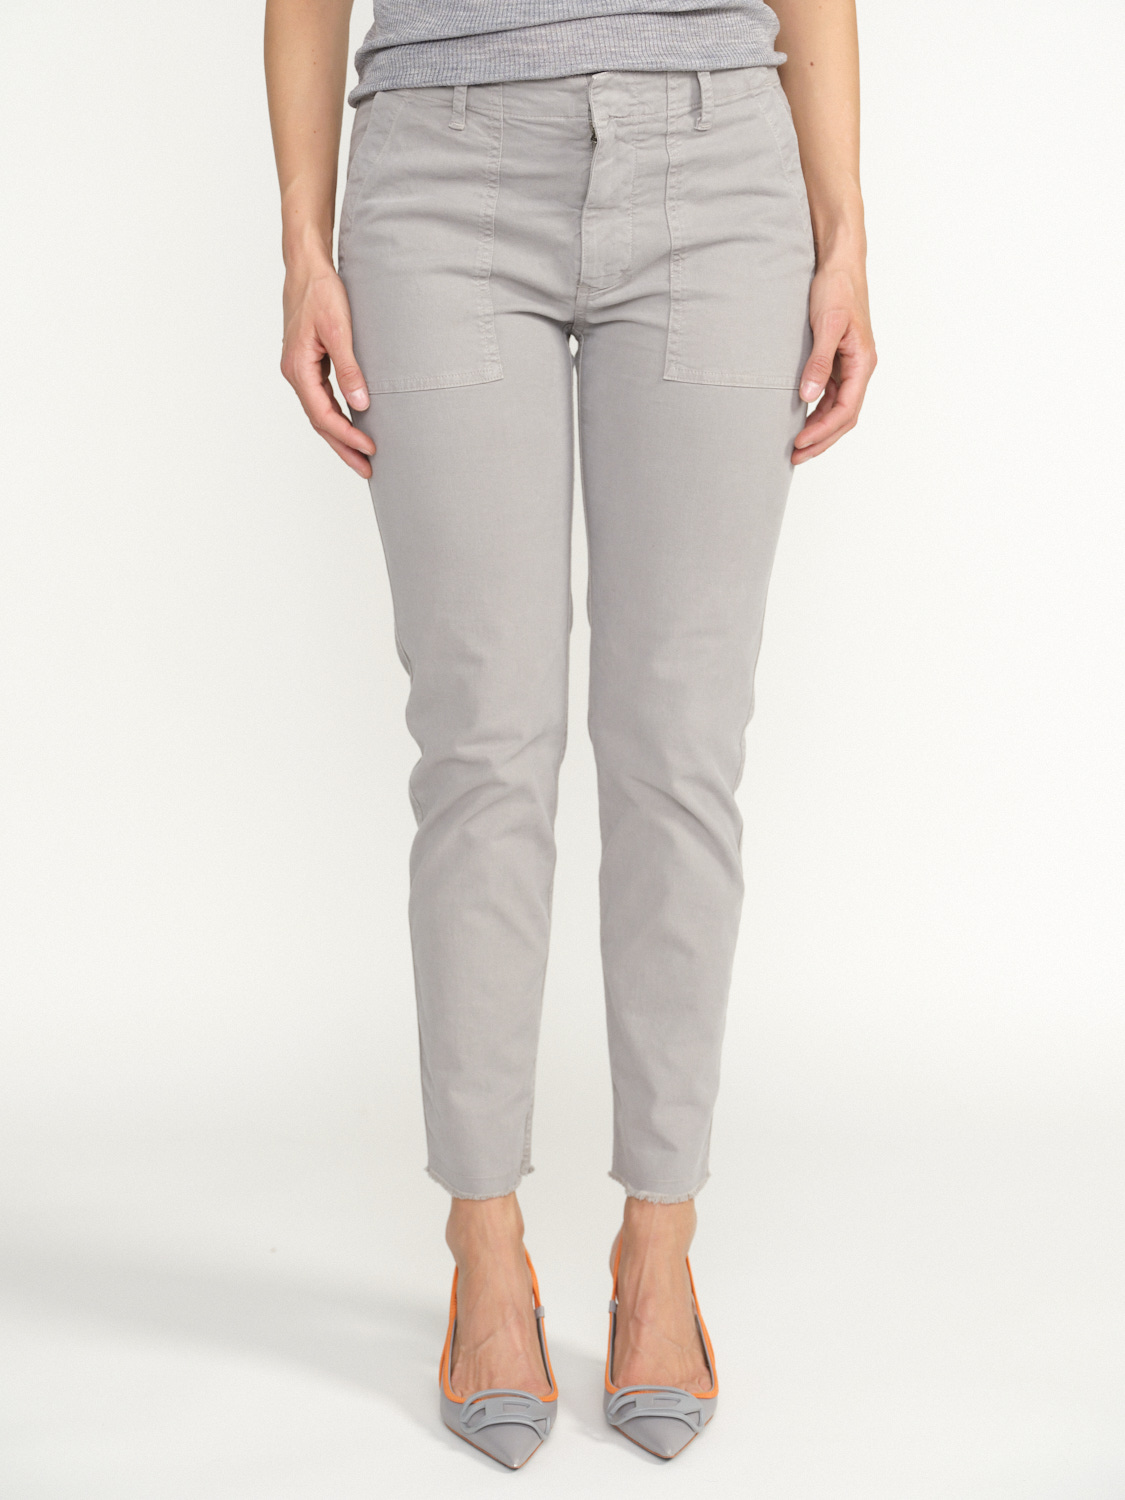 Nili Lotan Jenna Pant - pantalón con grandes bolsillos abiertos  gris 34